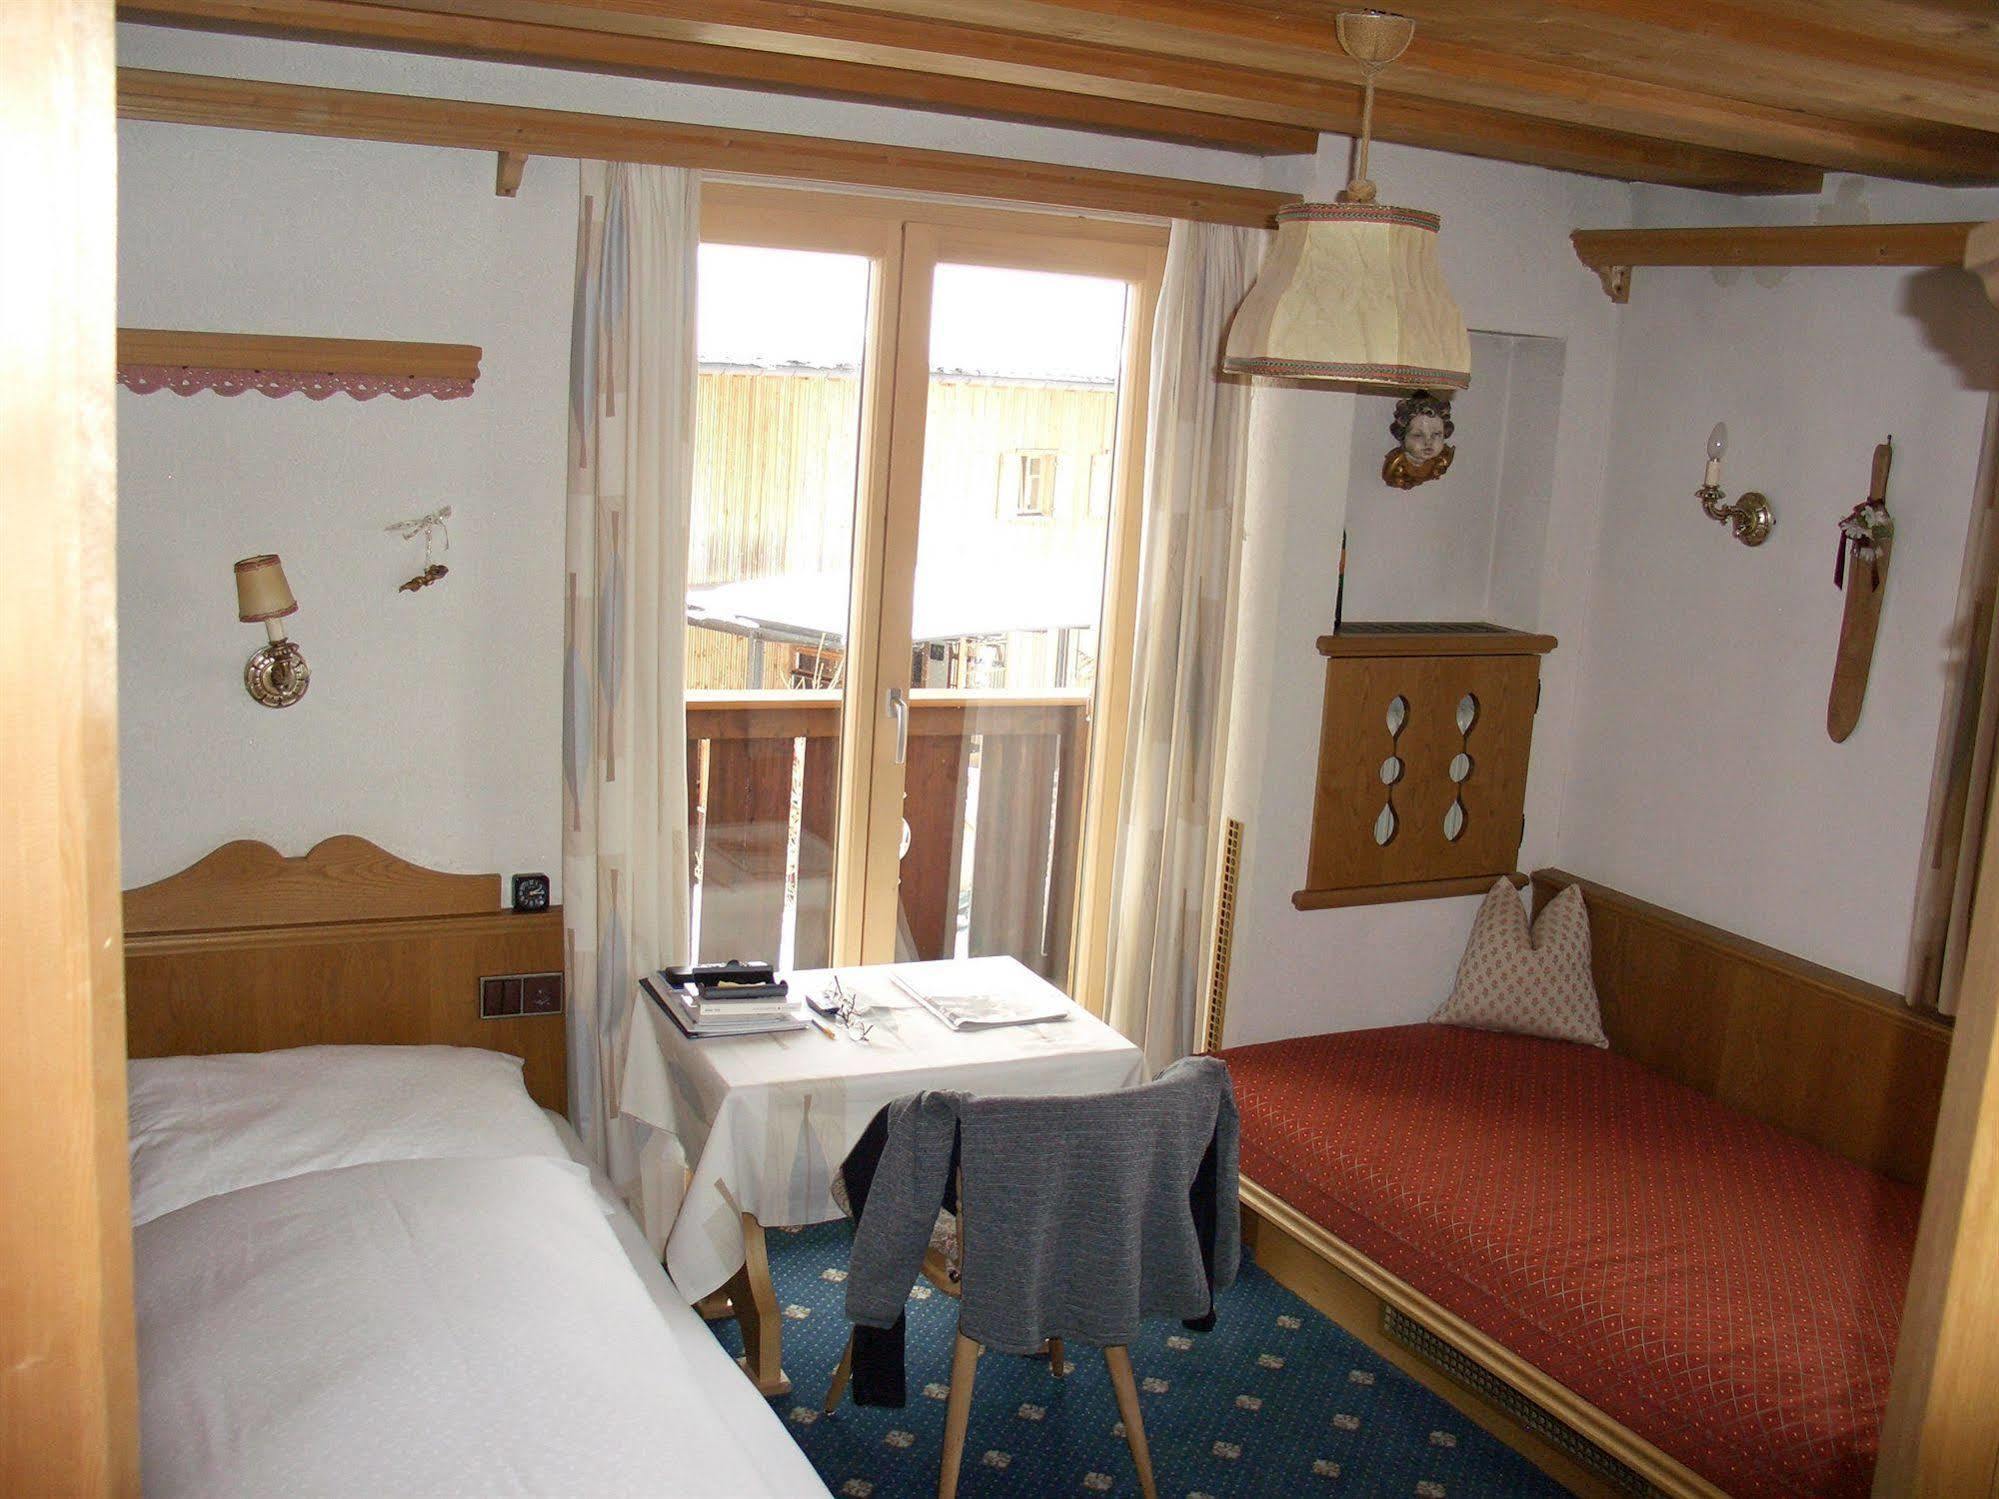 Hotel Stulzis Lech am Arlberg Εξωτερικό φωτογραφία